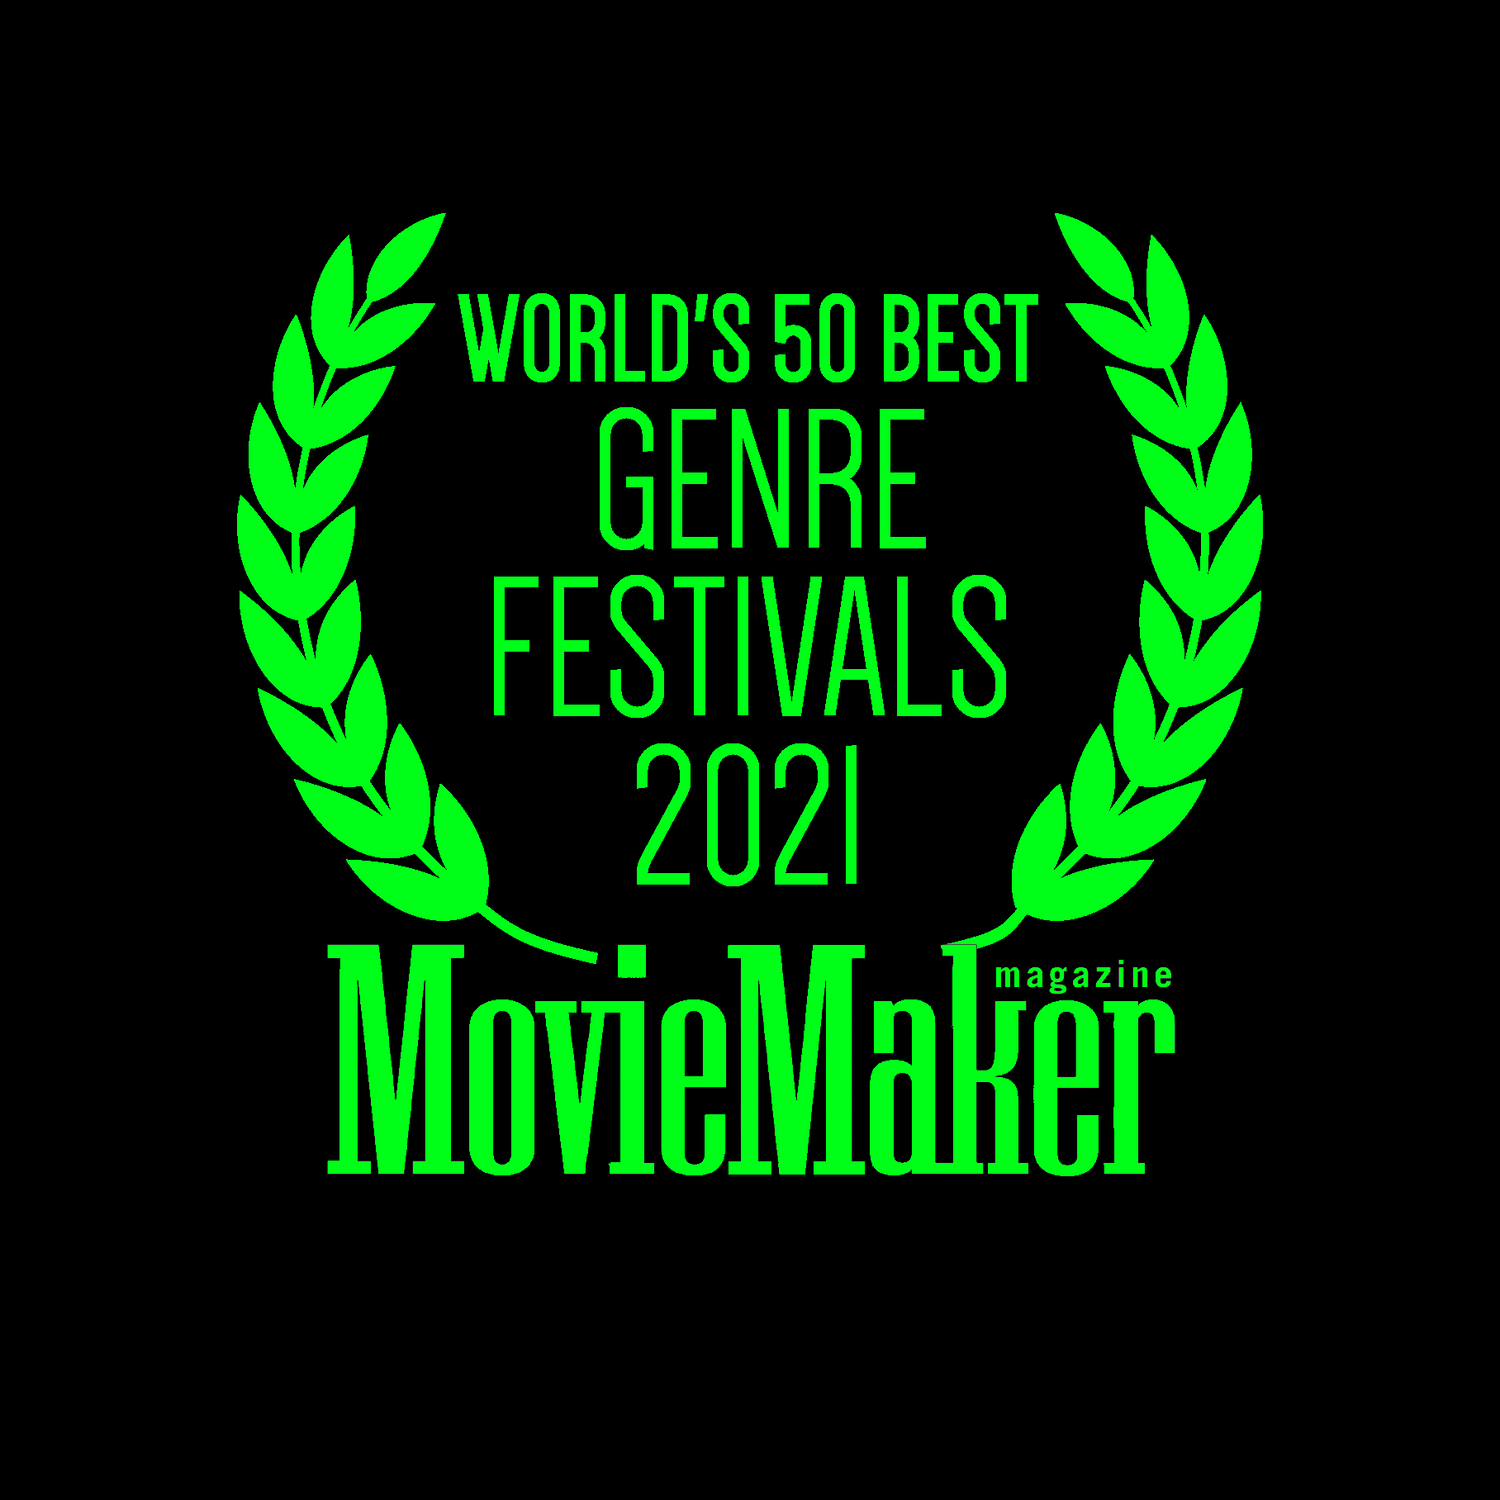 Salem Horror Fest 2021 - World's 50 Best Genre Festivals 2021 - logo from Movie Makers Magazine - green version